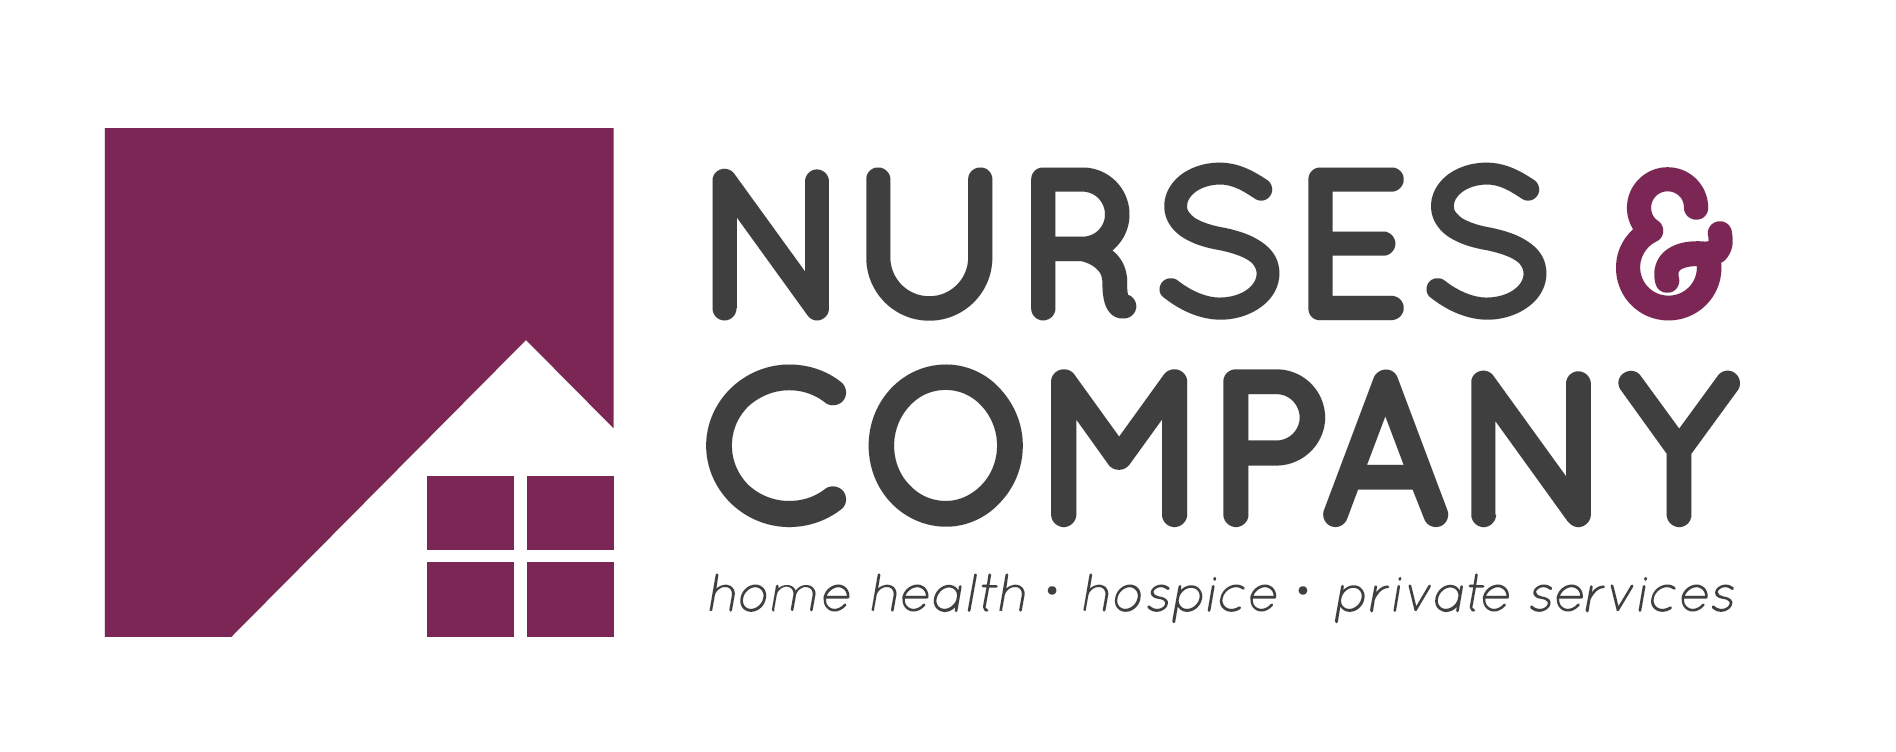 Nurses & Company Home Health & Hospice Foundation logo